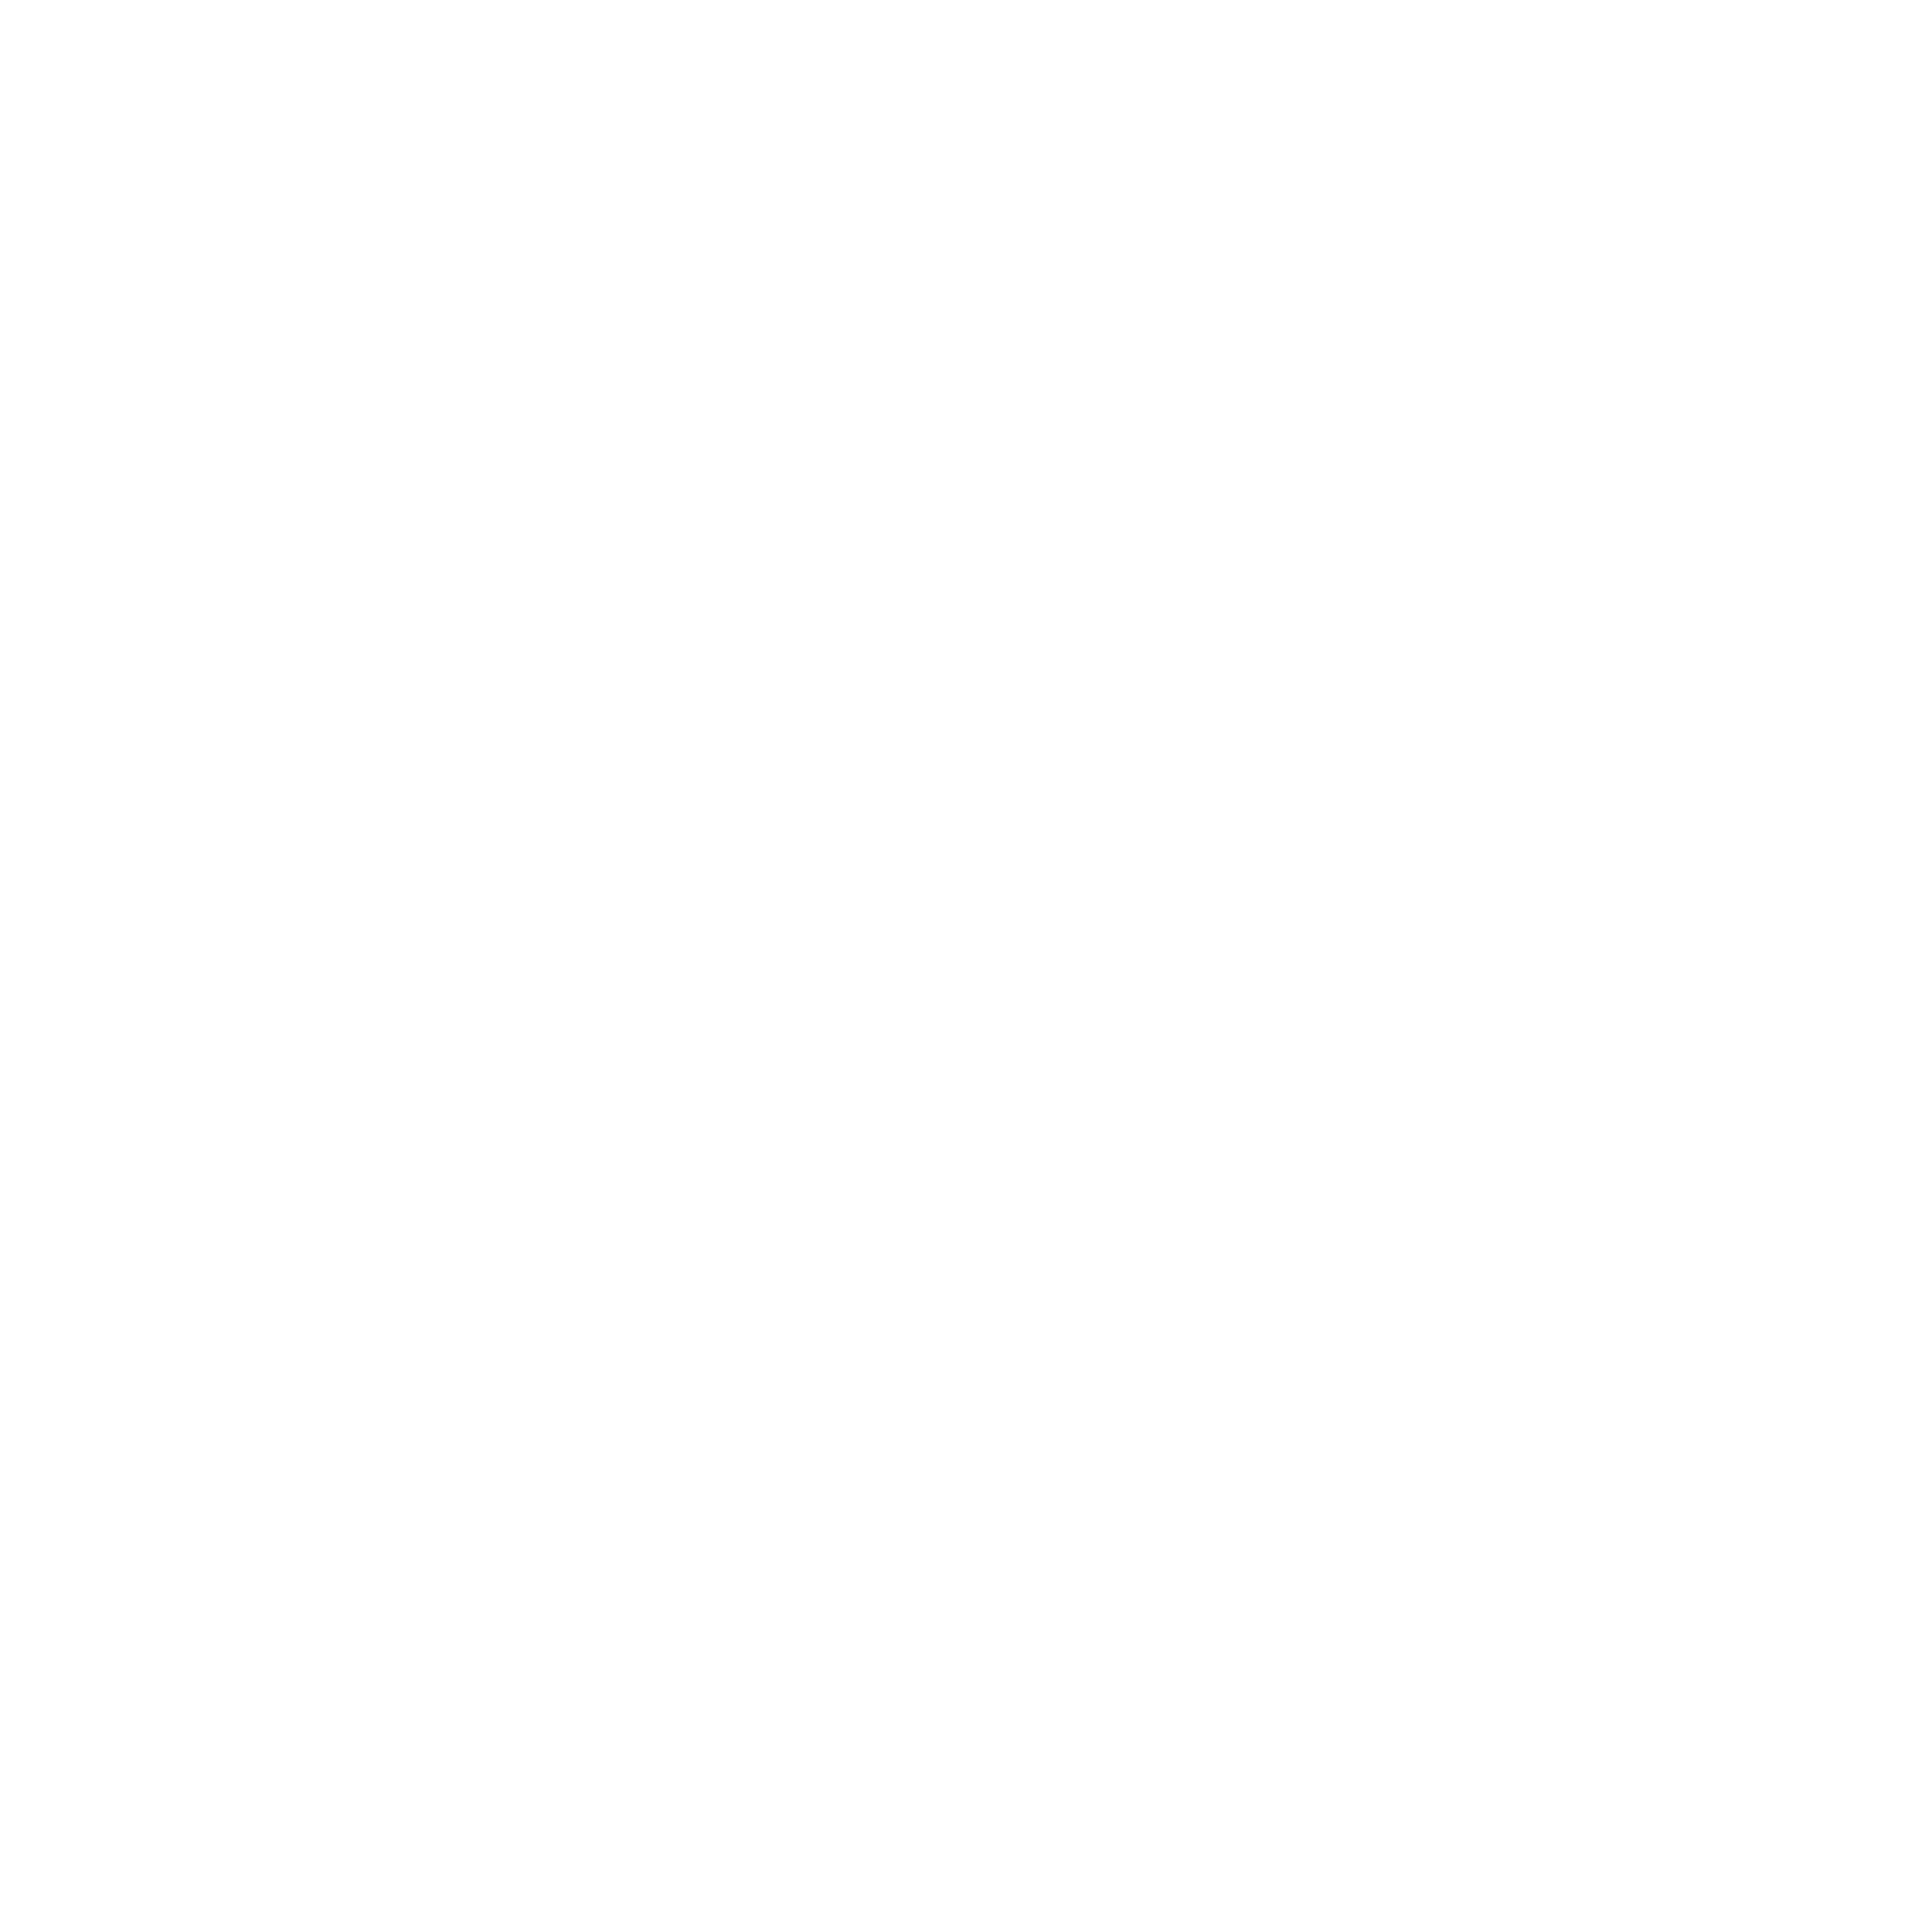 Cephalon Logo - Cephalon Logo PNG Transparent & SVG Vector